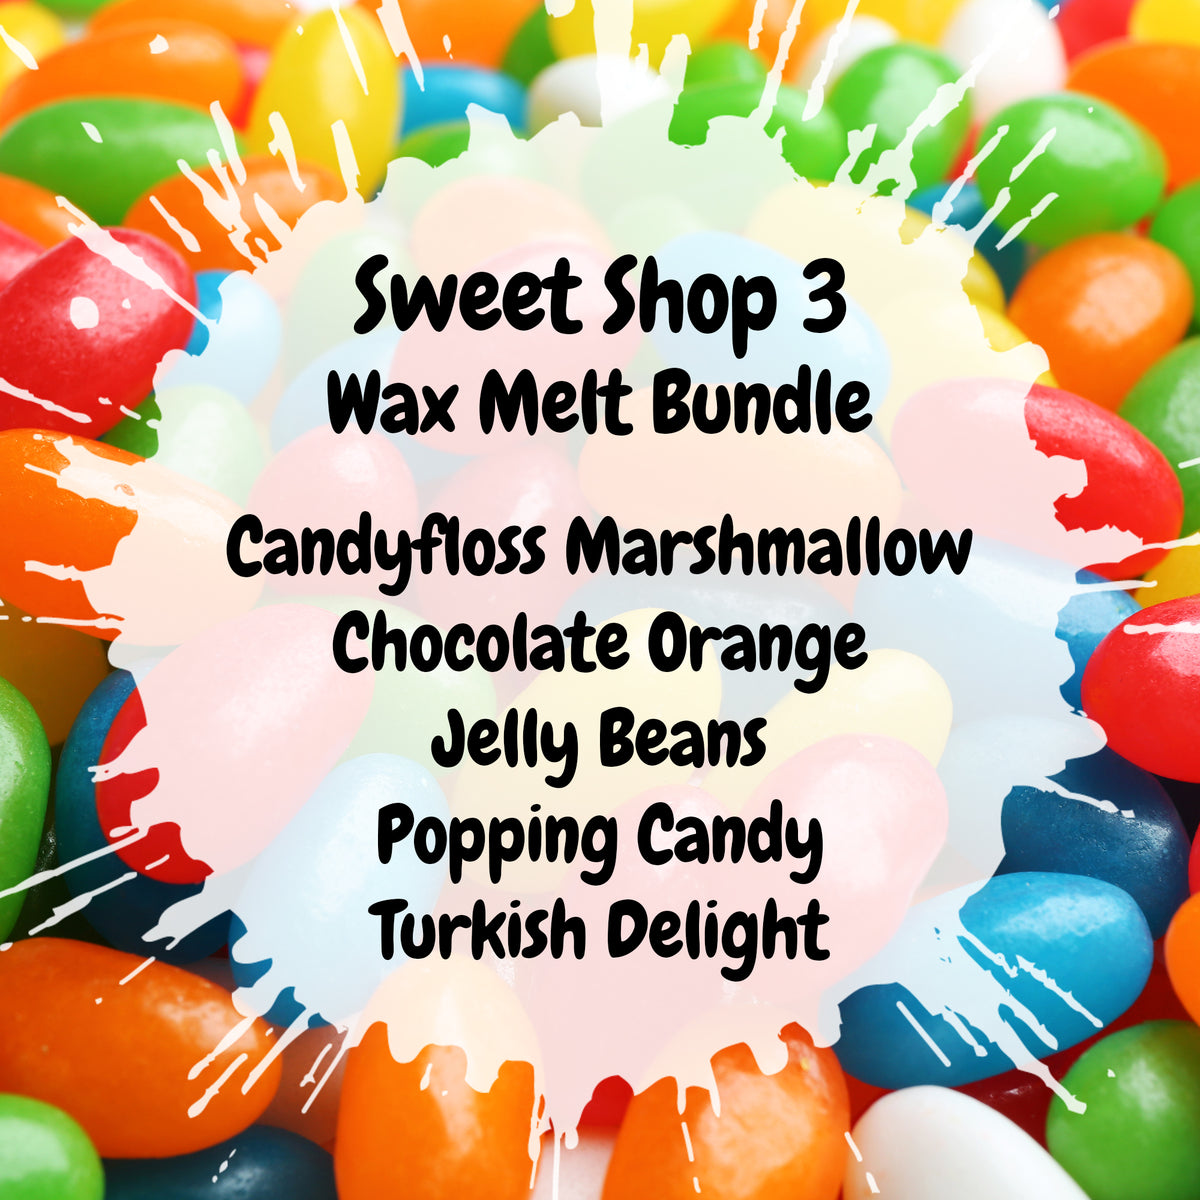 Sweet Shop 3 Wax Melt Bundle